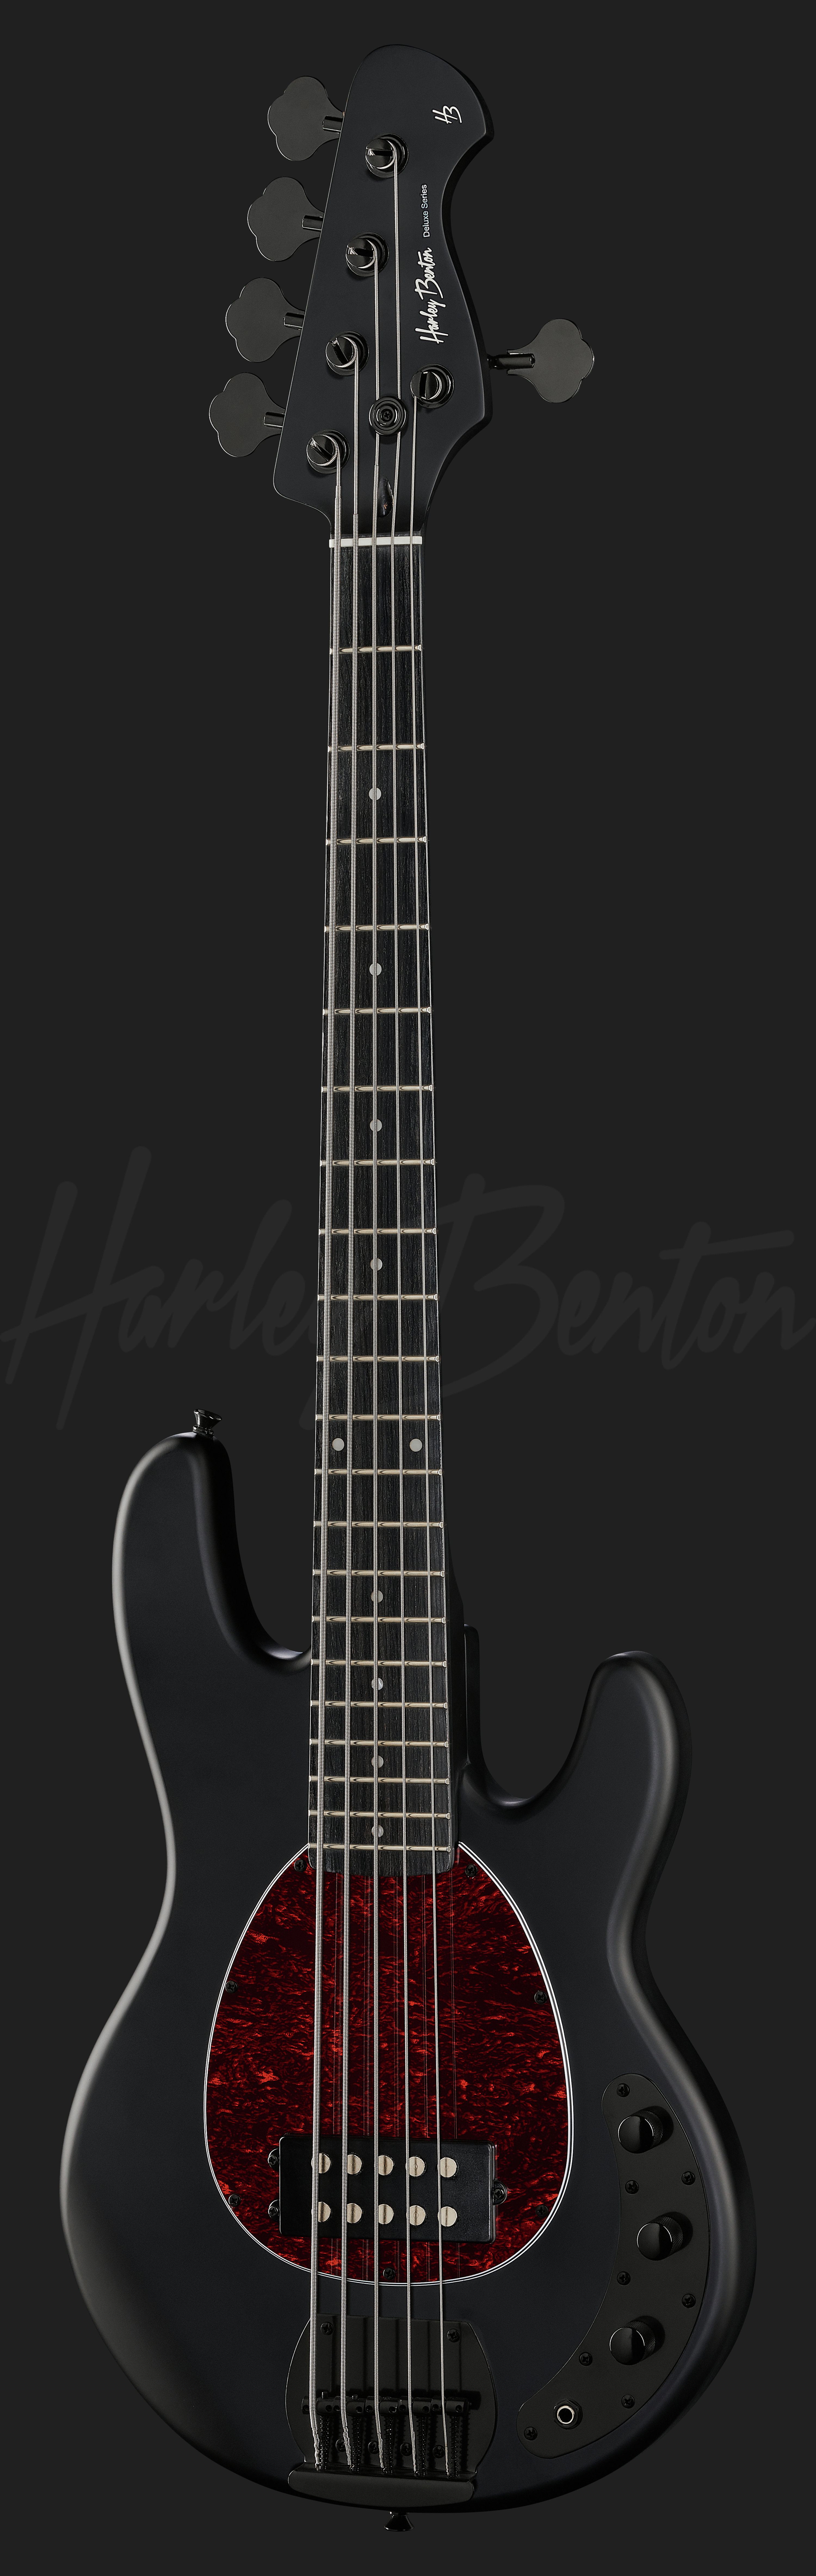 Harley Benton MB-5 SB Deluxe